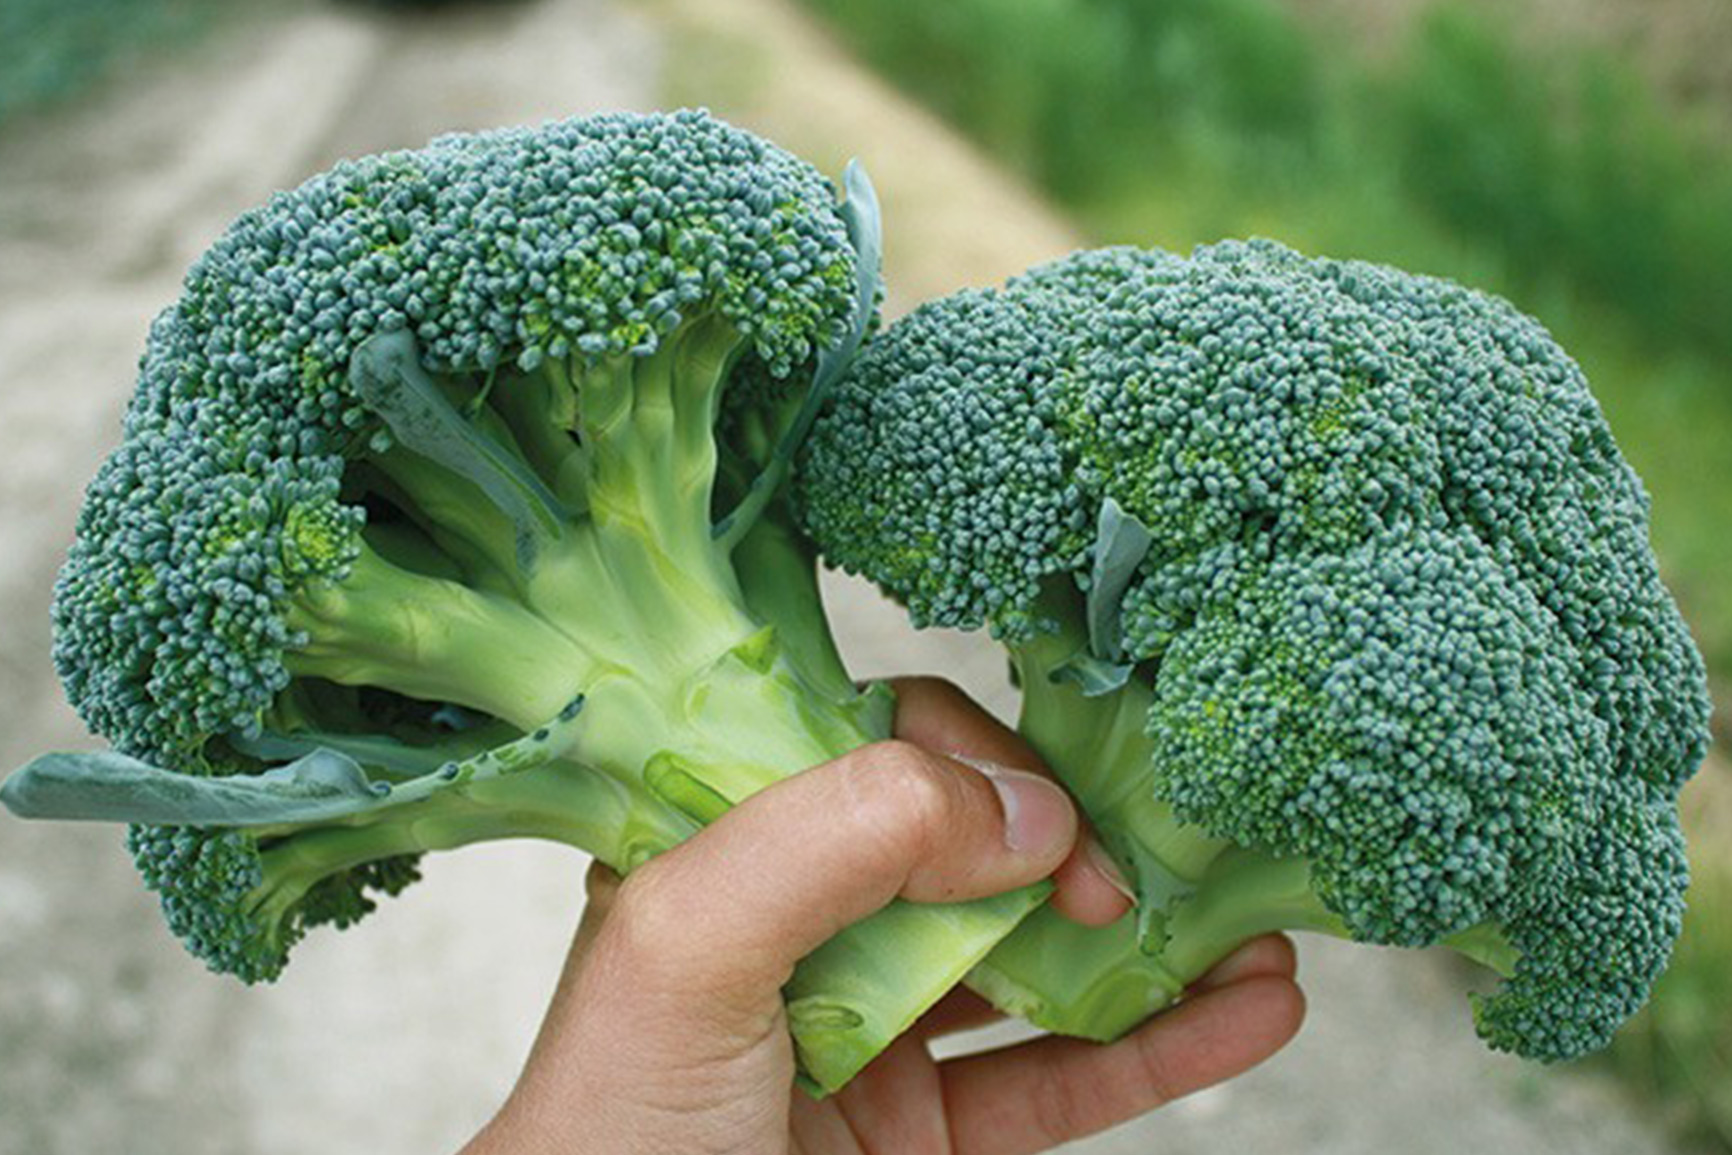 Broccoli Grower Bruinsma and organic produce of - packer Bio